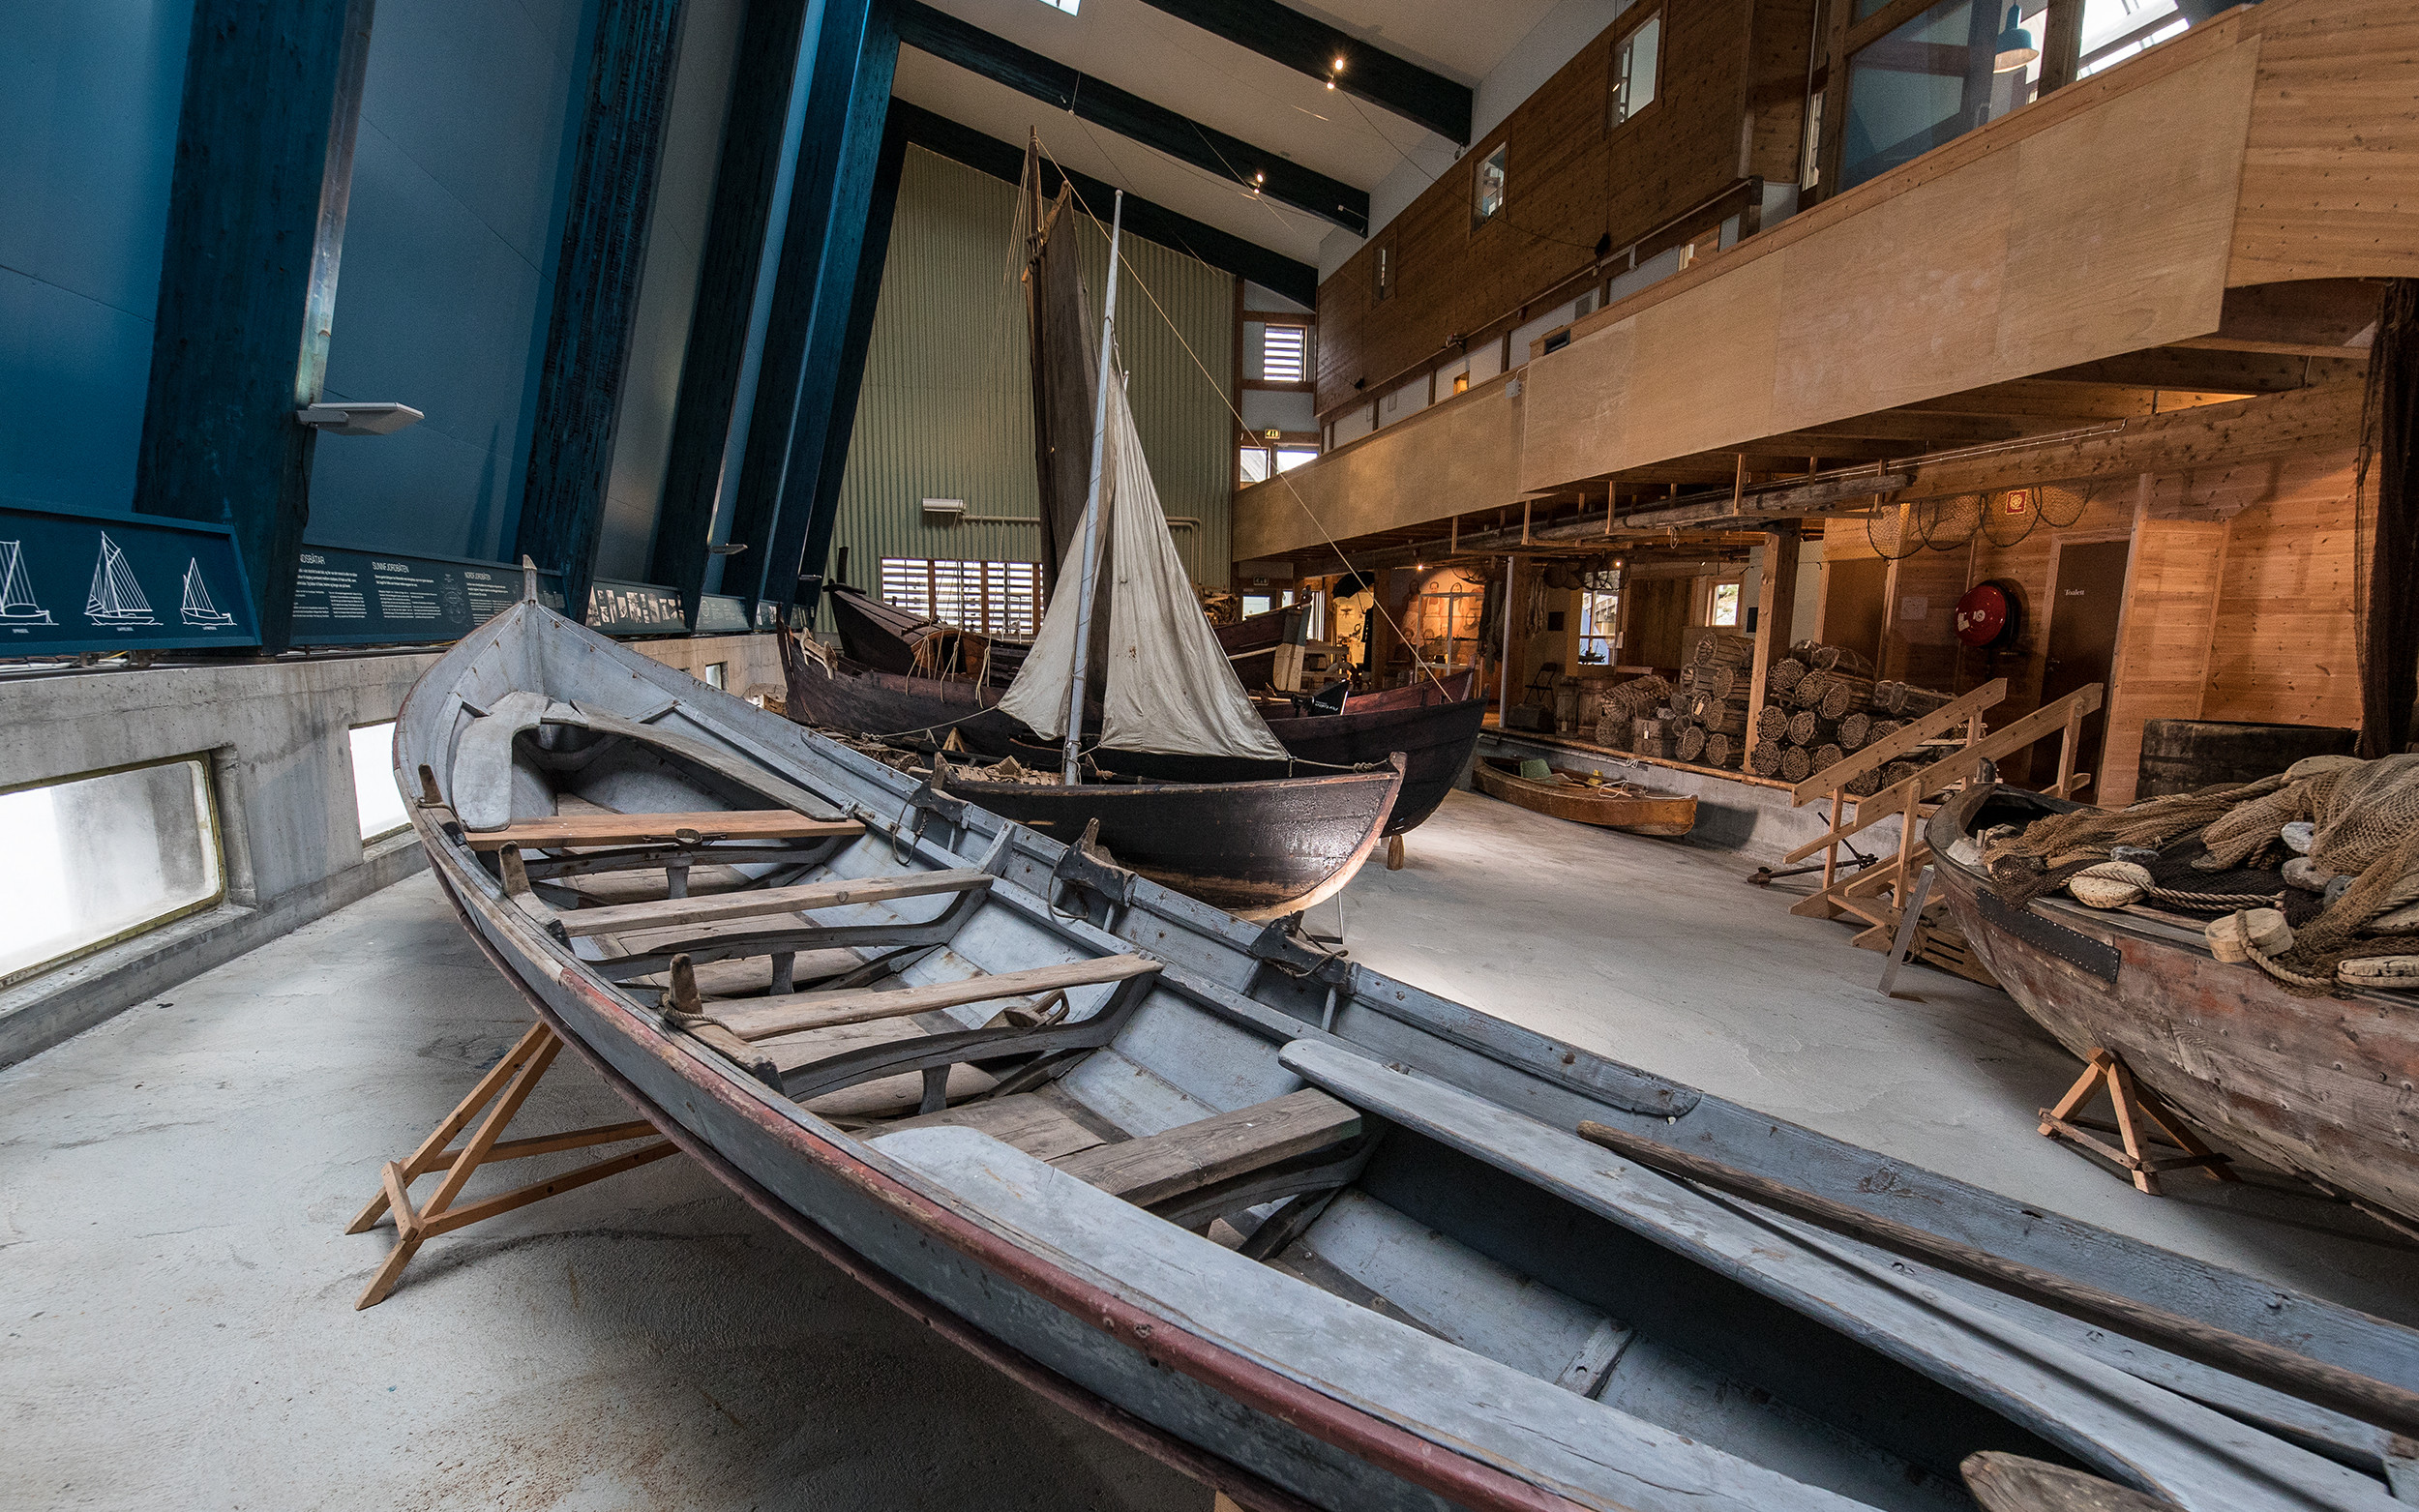 Oversiktsbilde over båthallen på Kystmuseet med fleire eldre trebåtar, teiner og garn.